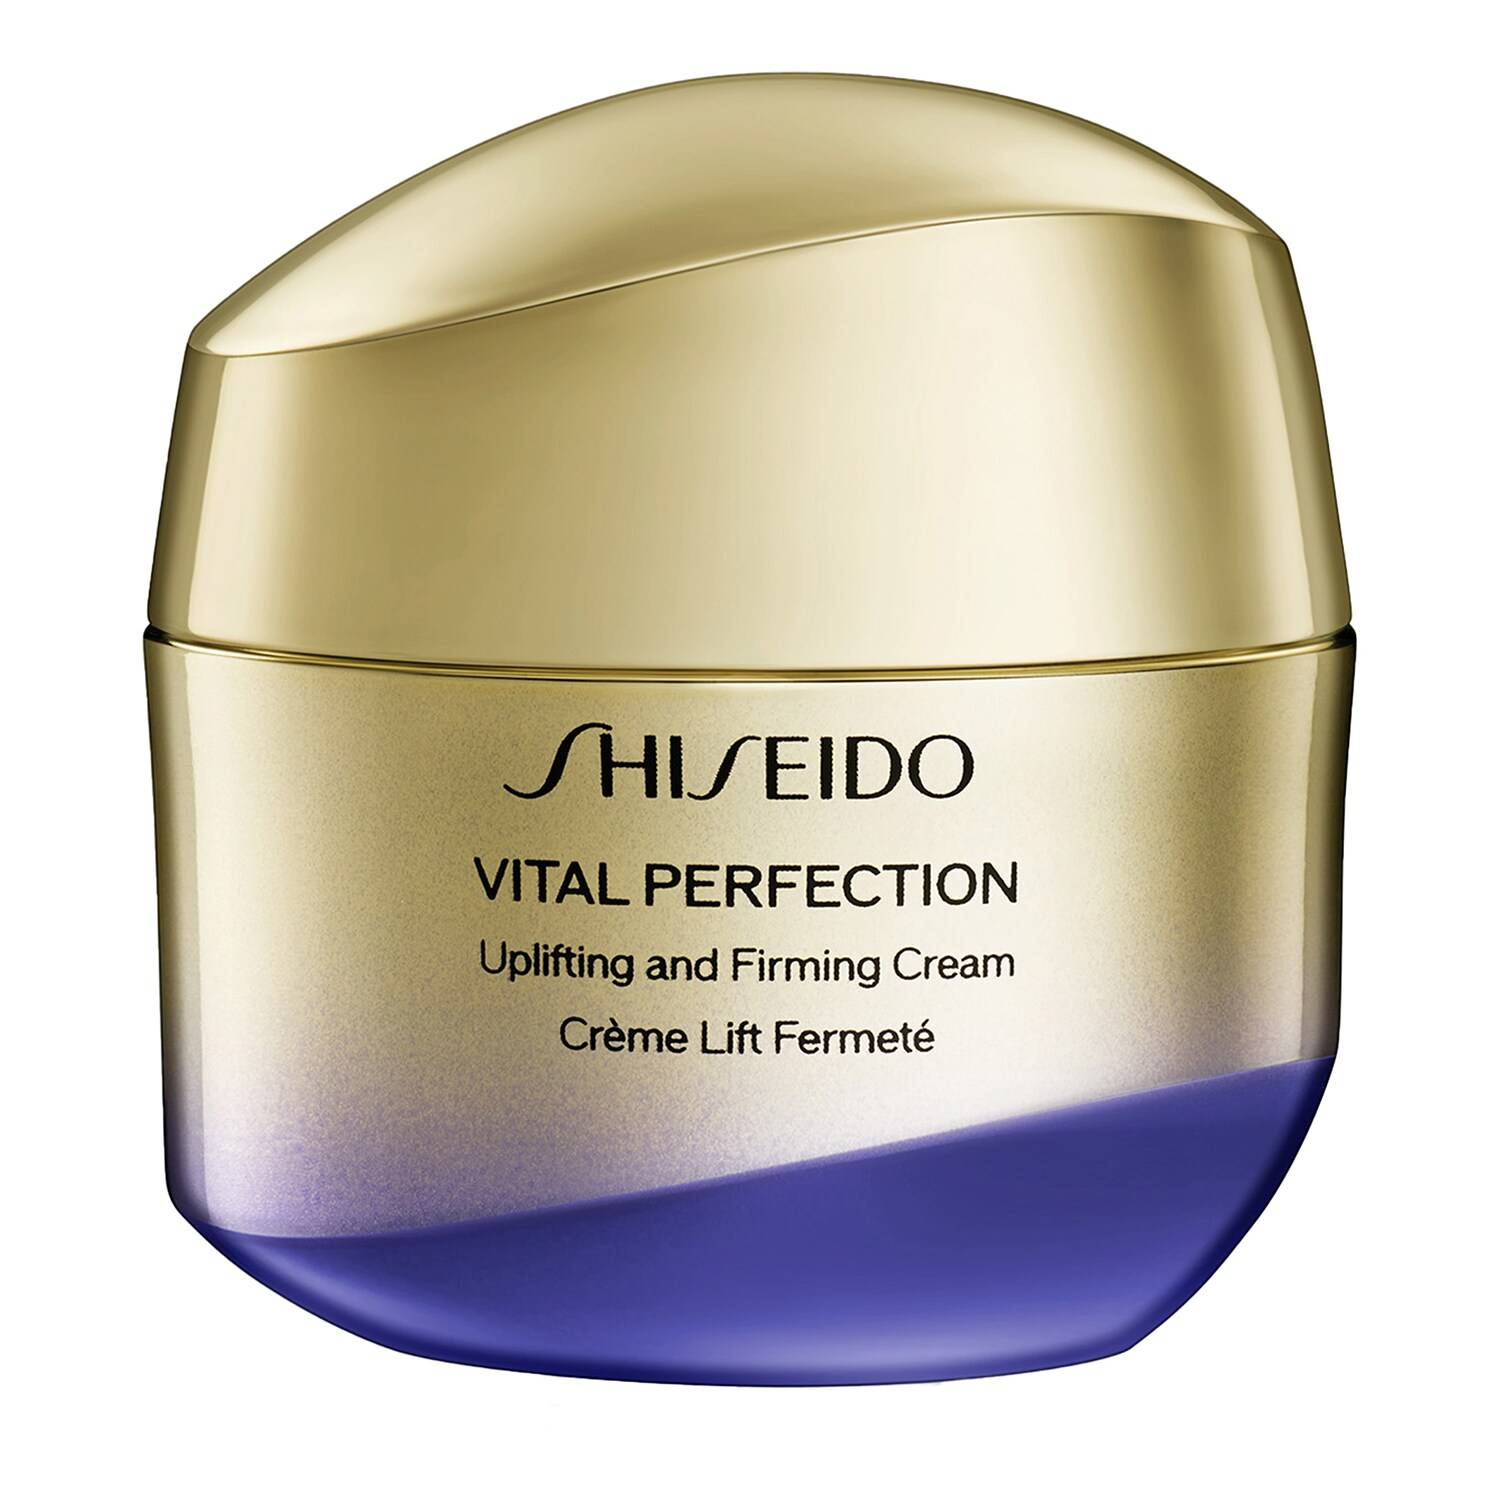 SHISEIDO Vital Perfection Uplifting and Firming Cream 30ml